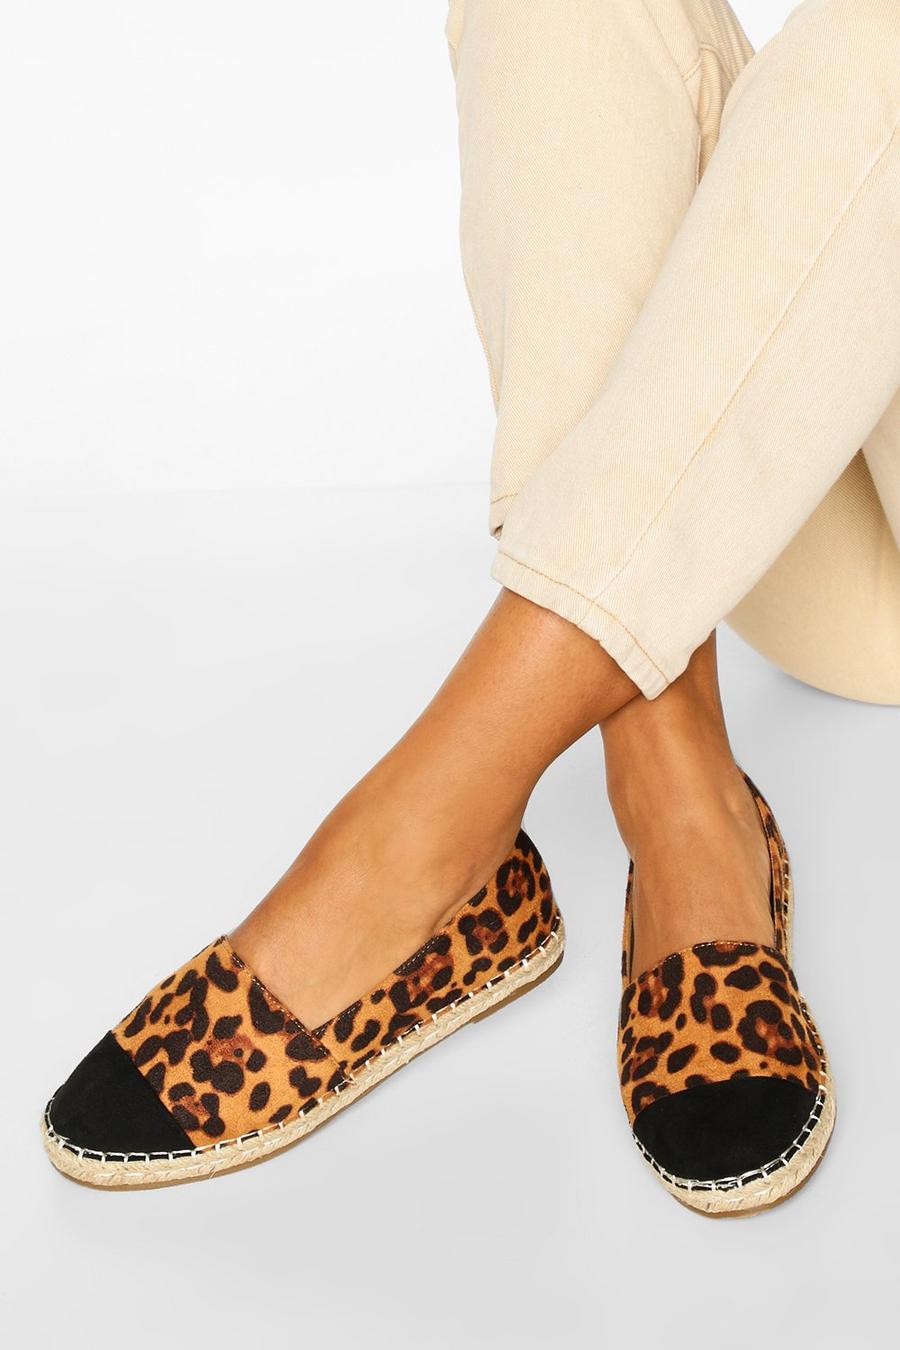 Animal Print Shoes | Leopard Print Shoes & Heels | boohoo UK